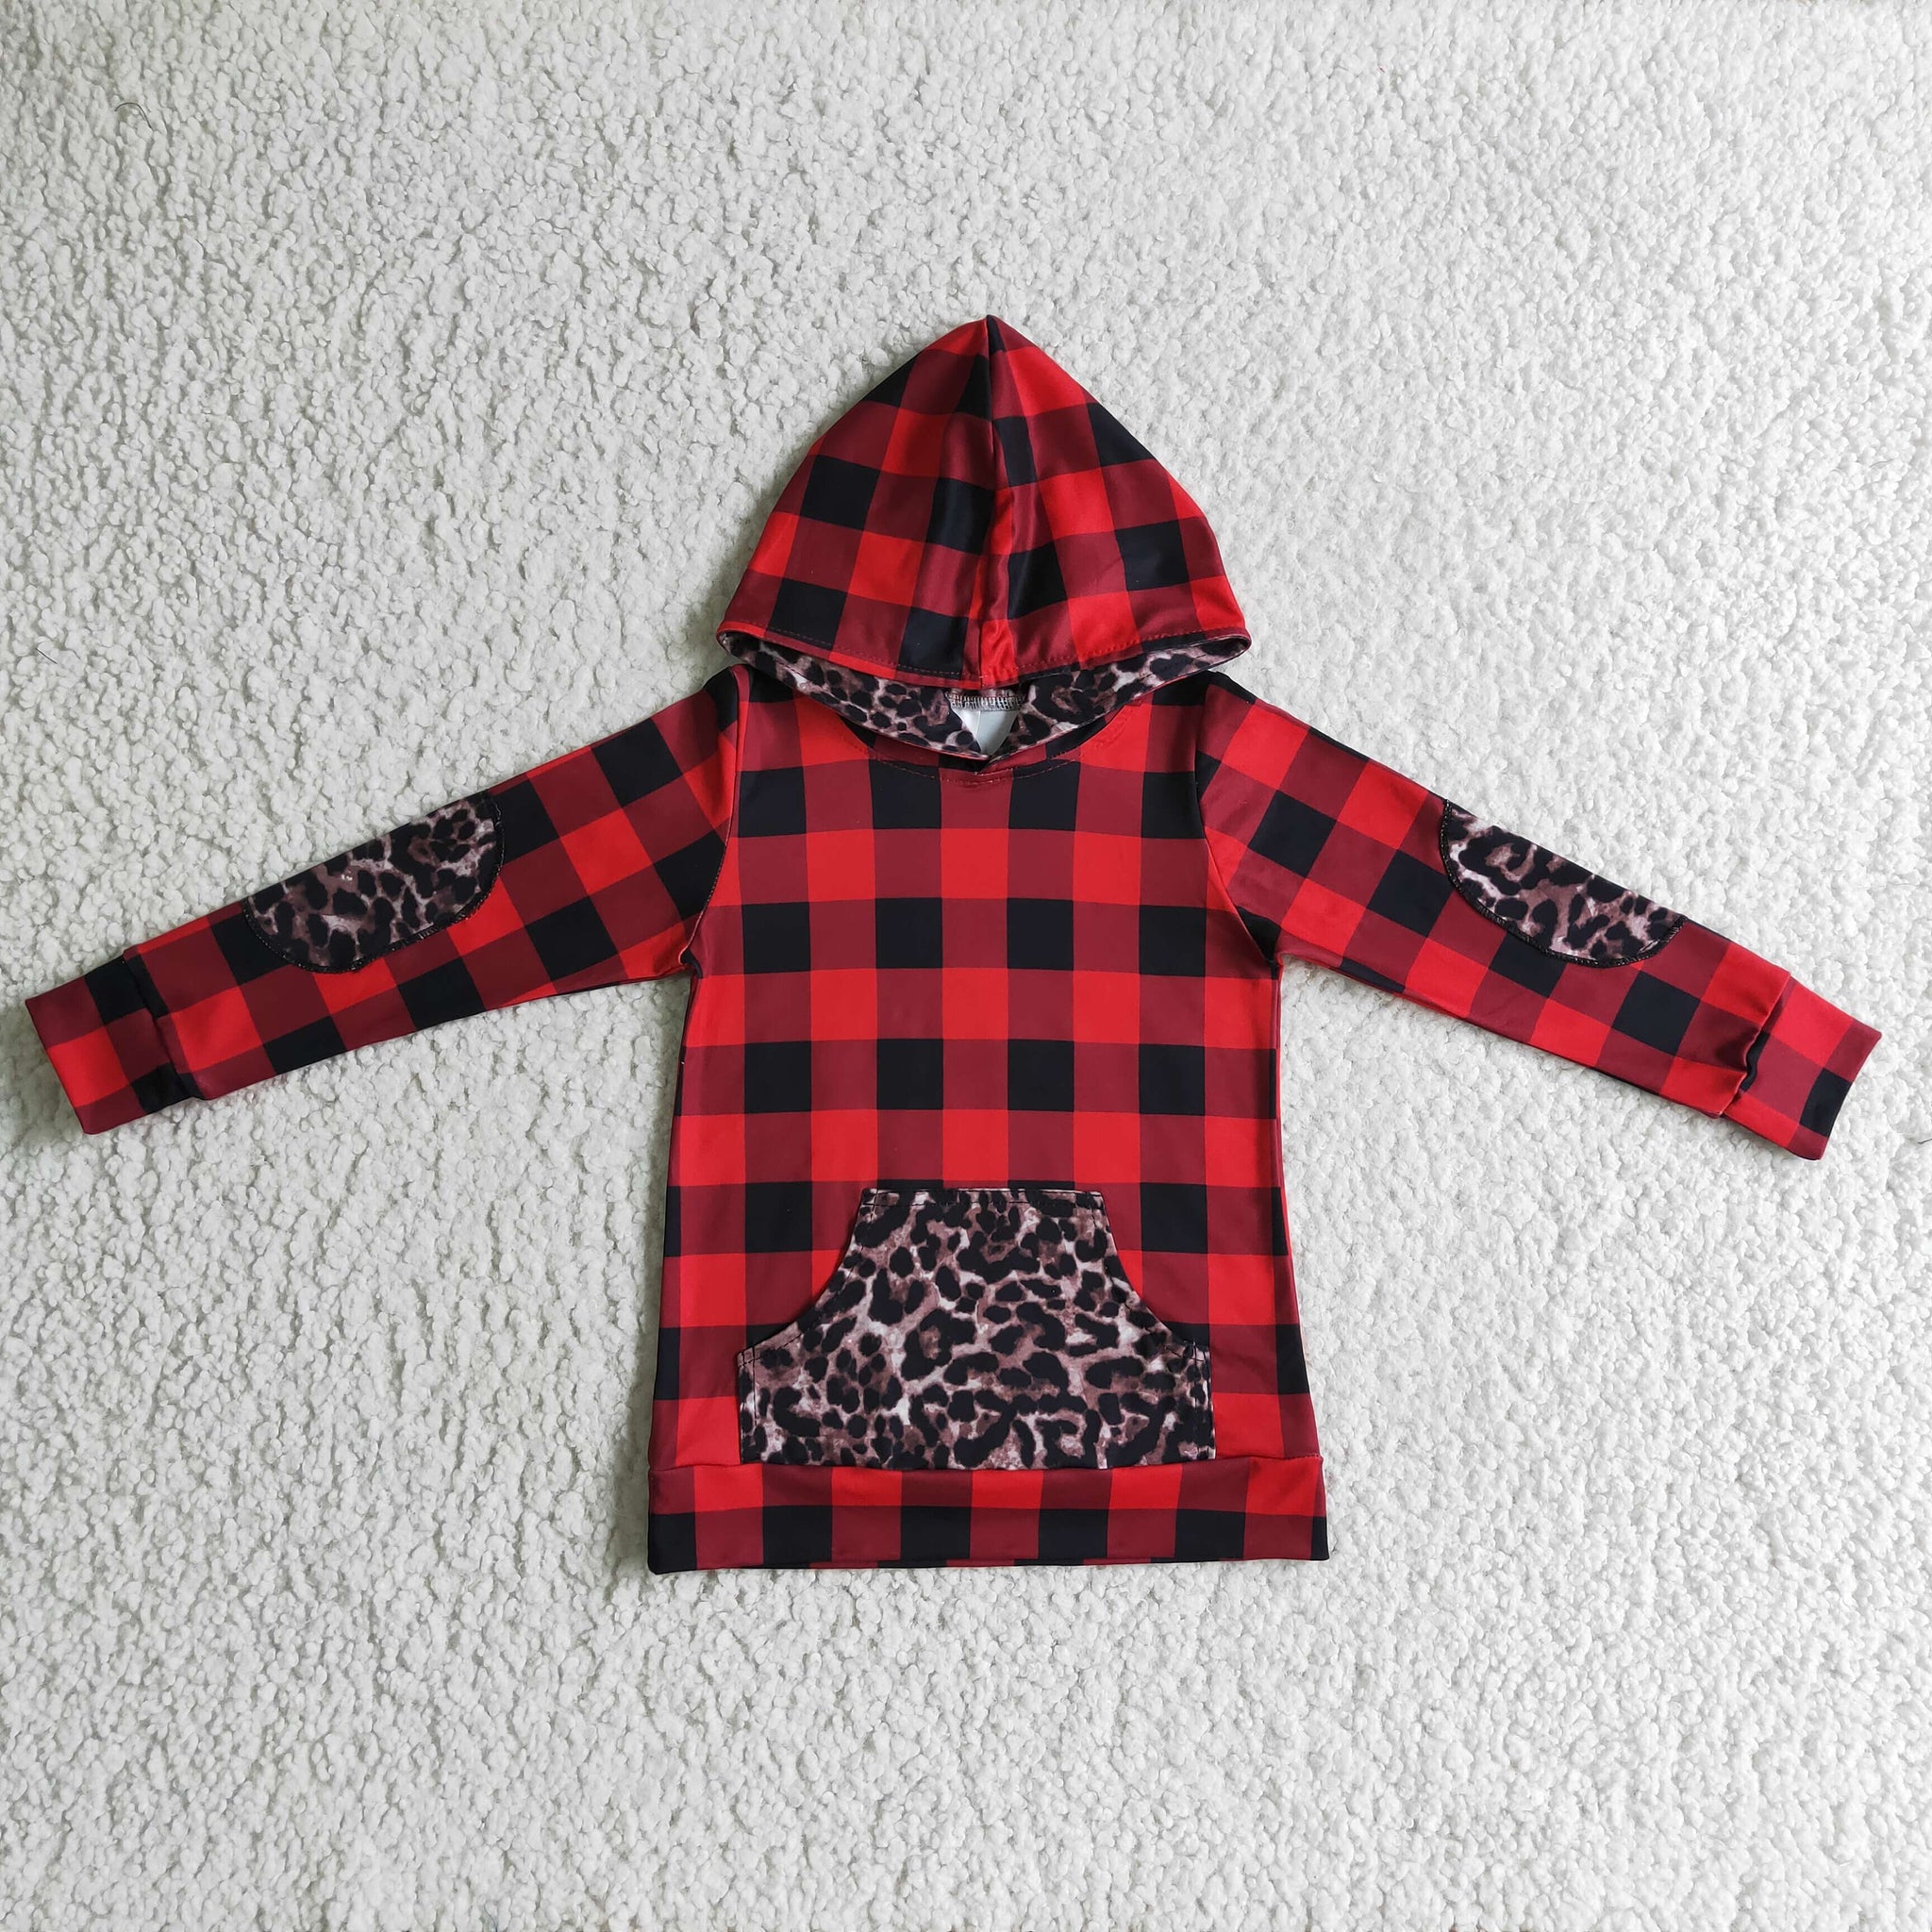 BT0048 baby boy clothes red plaid leopard shirt